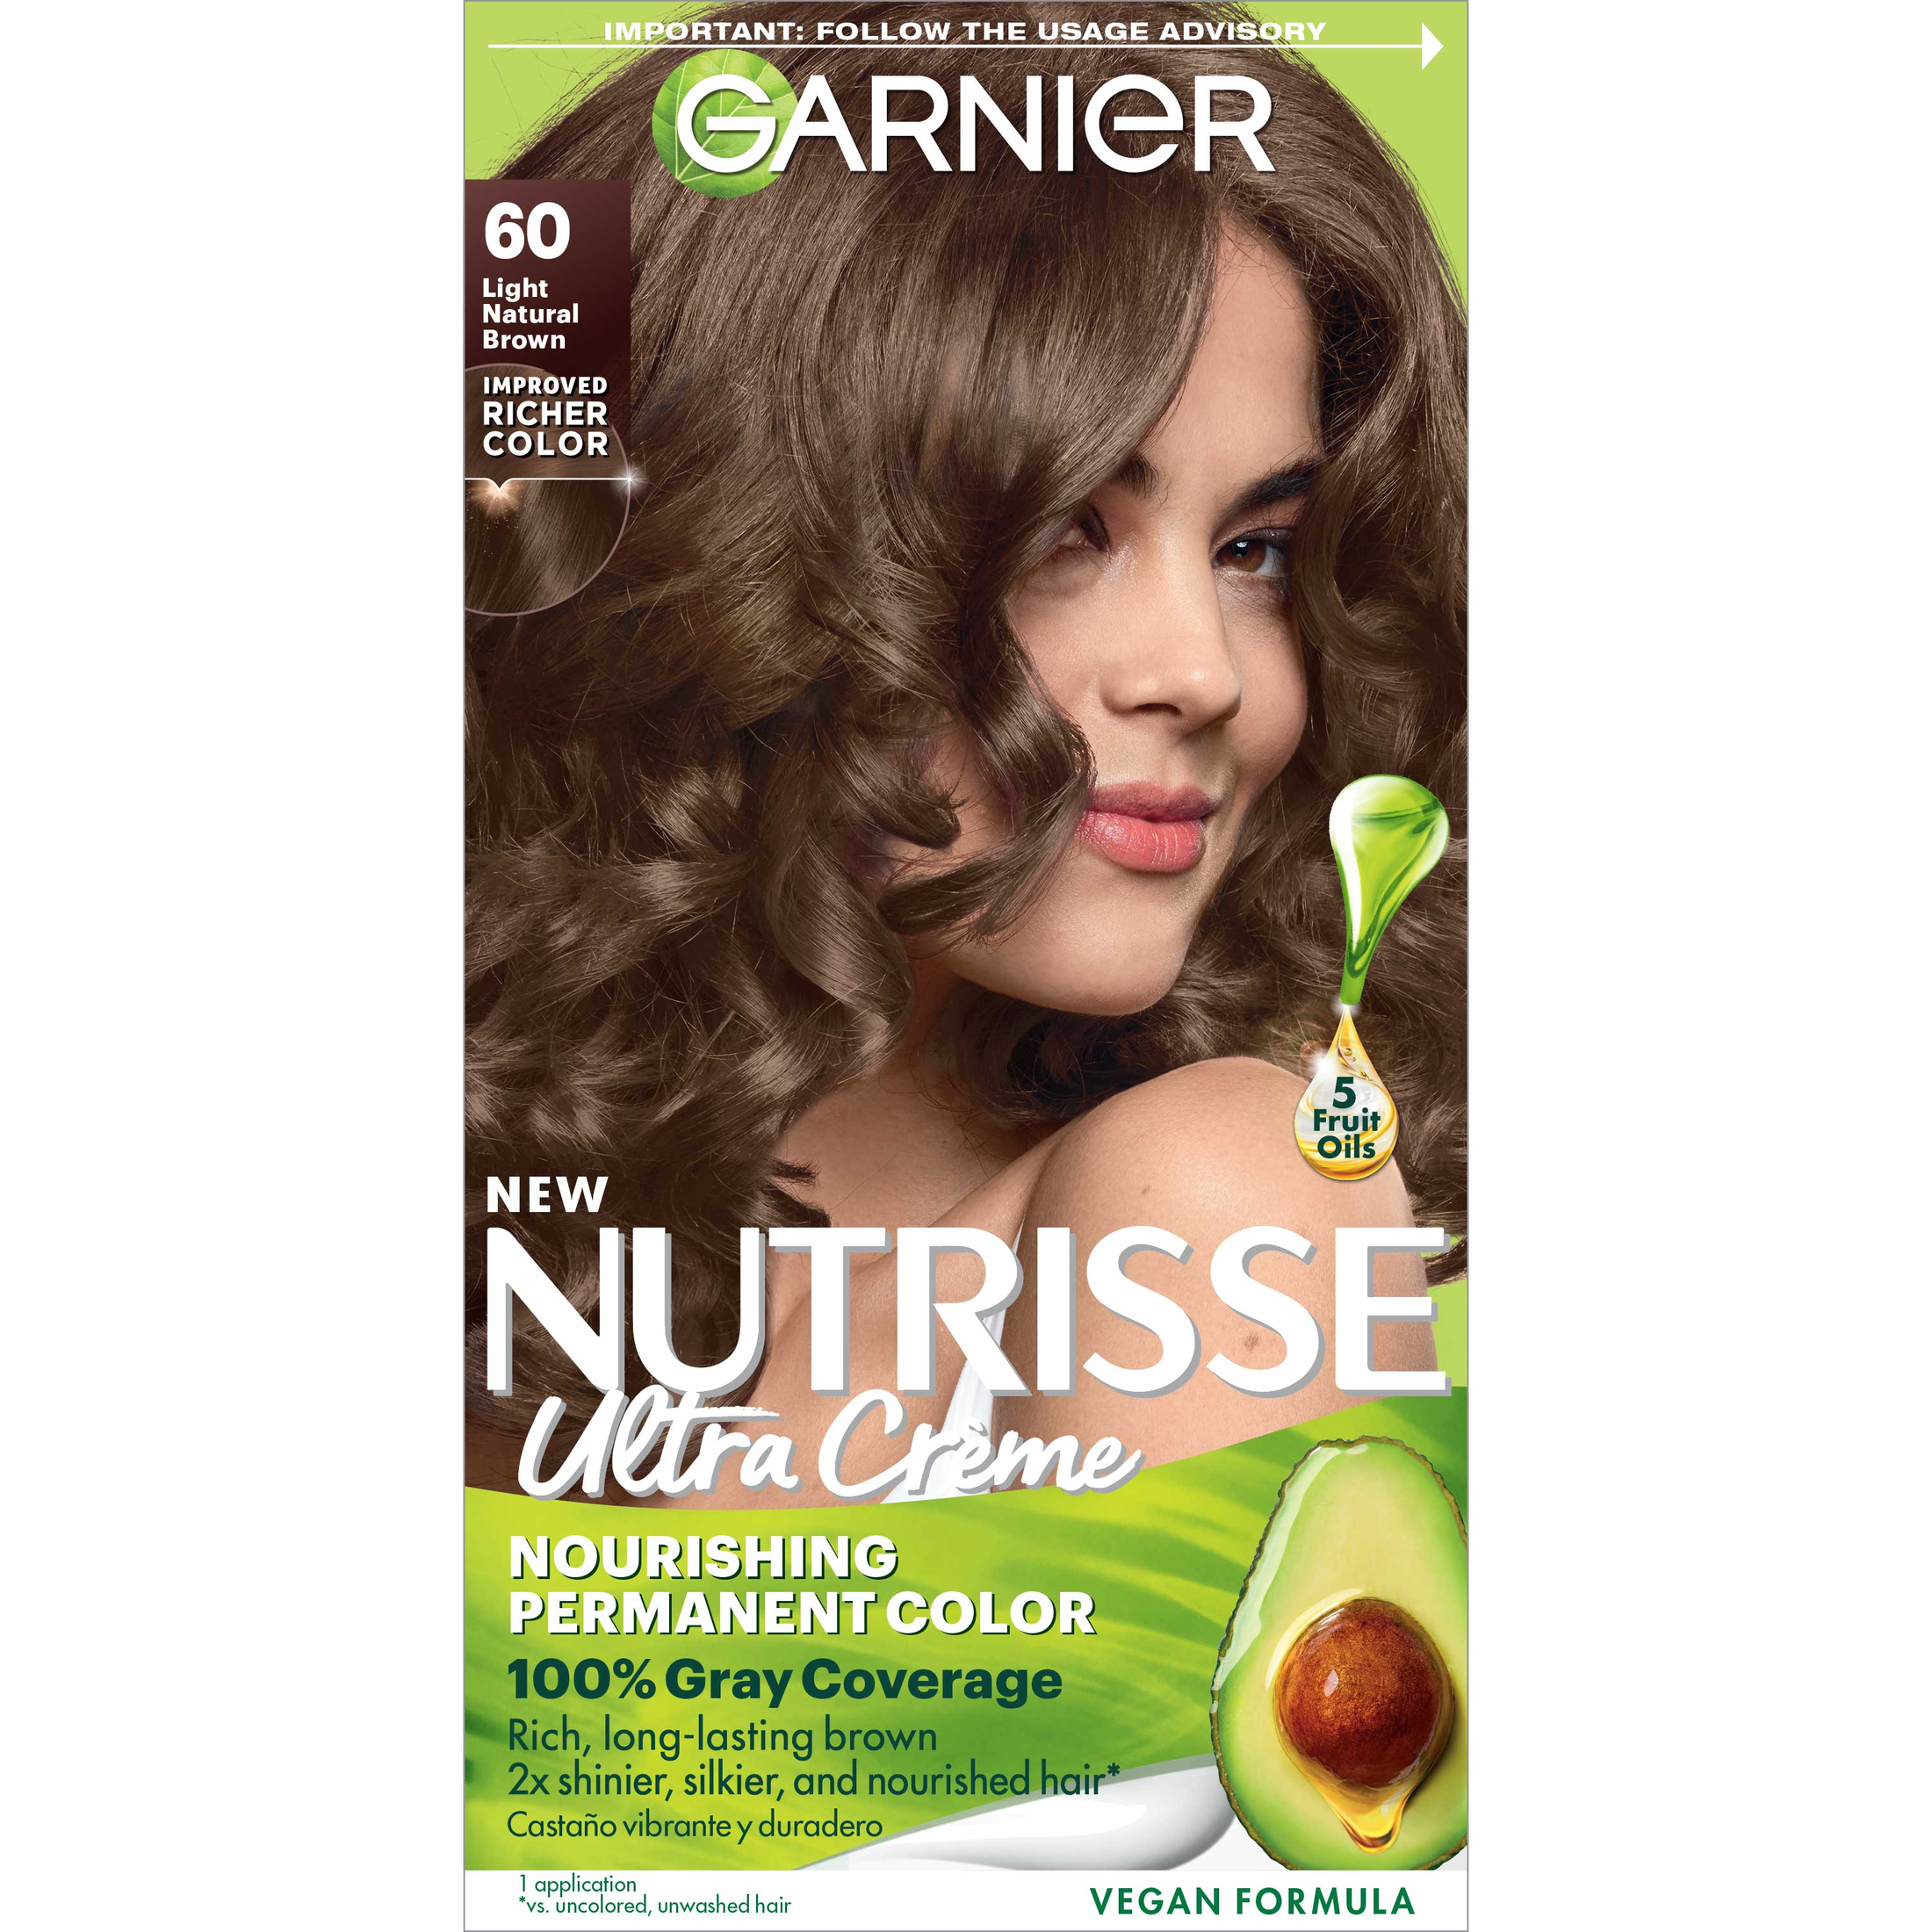 Garnier Nutrisse Nourishing Hair Color Creme, 060 Light Natural Brown Acorn - image 1 of 11